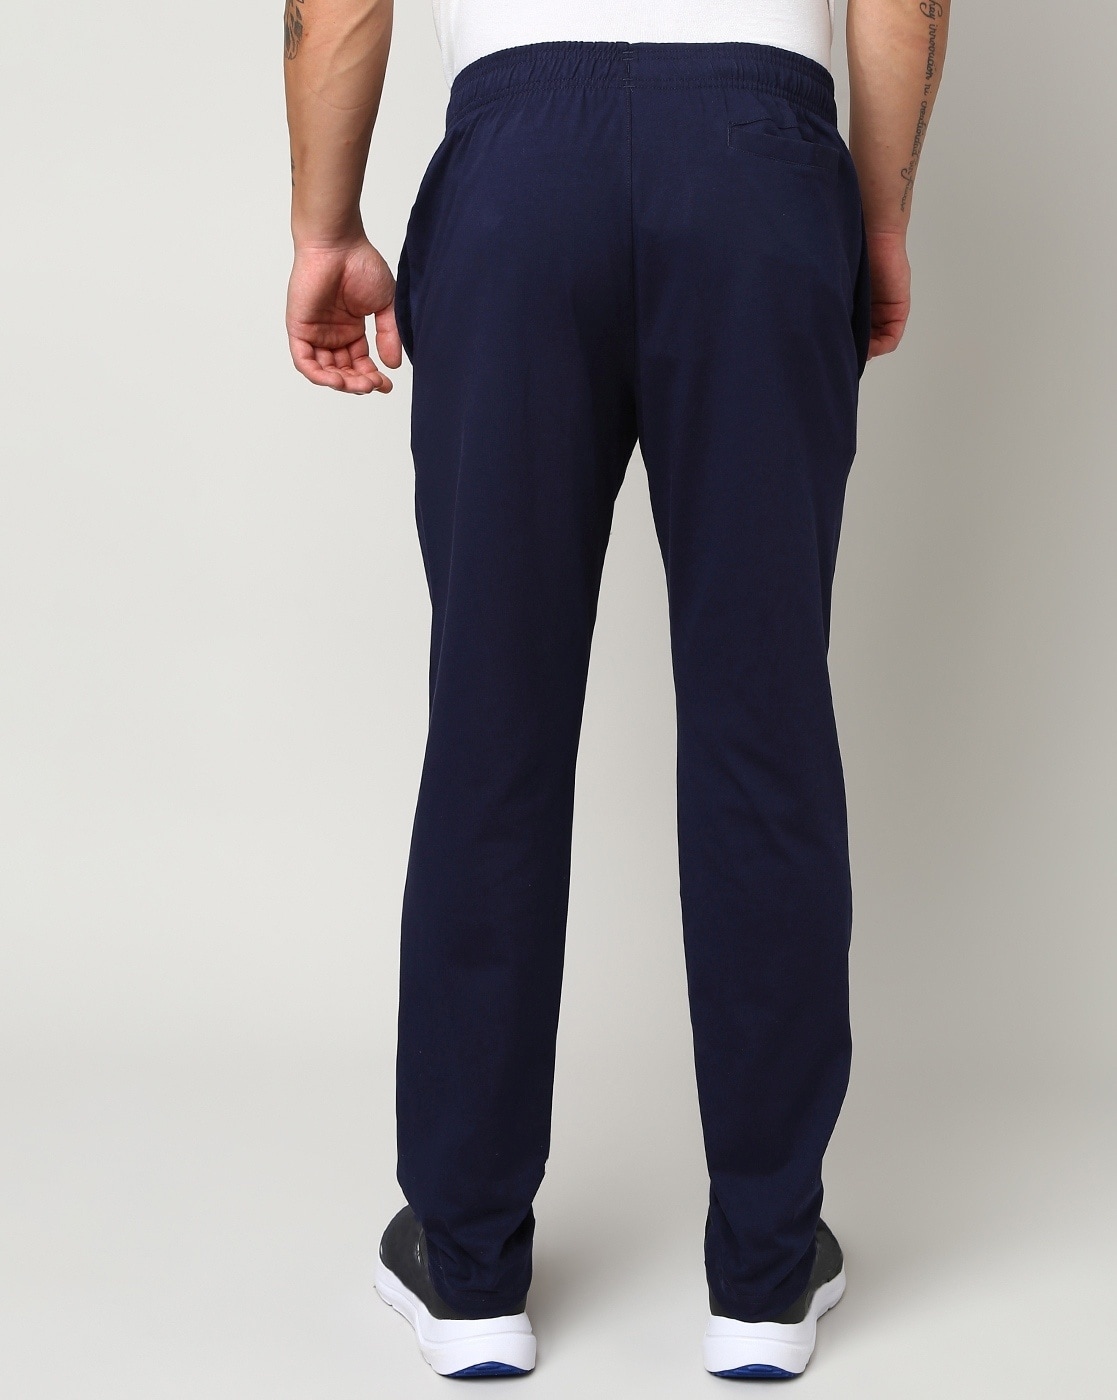 Reebok Classic Linear Pant, Black, Medium : Amazon.in: Fashion